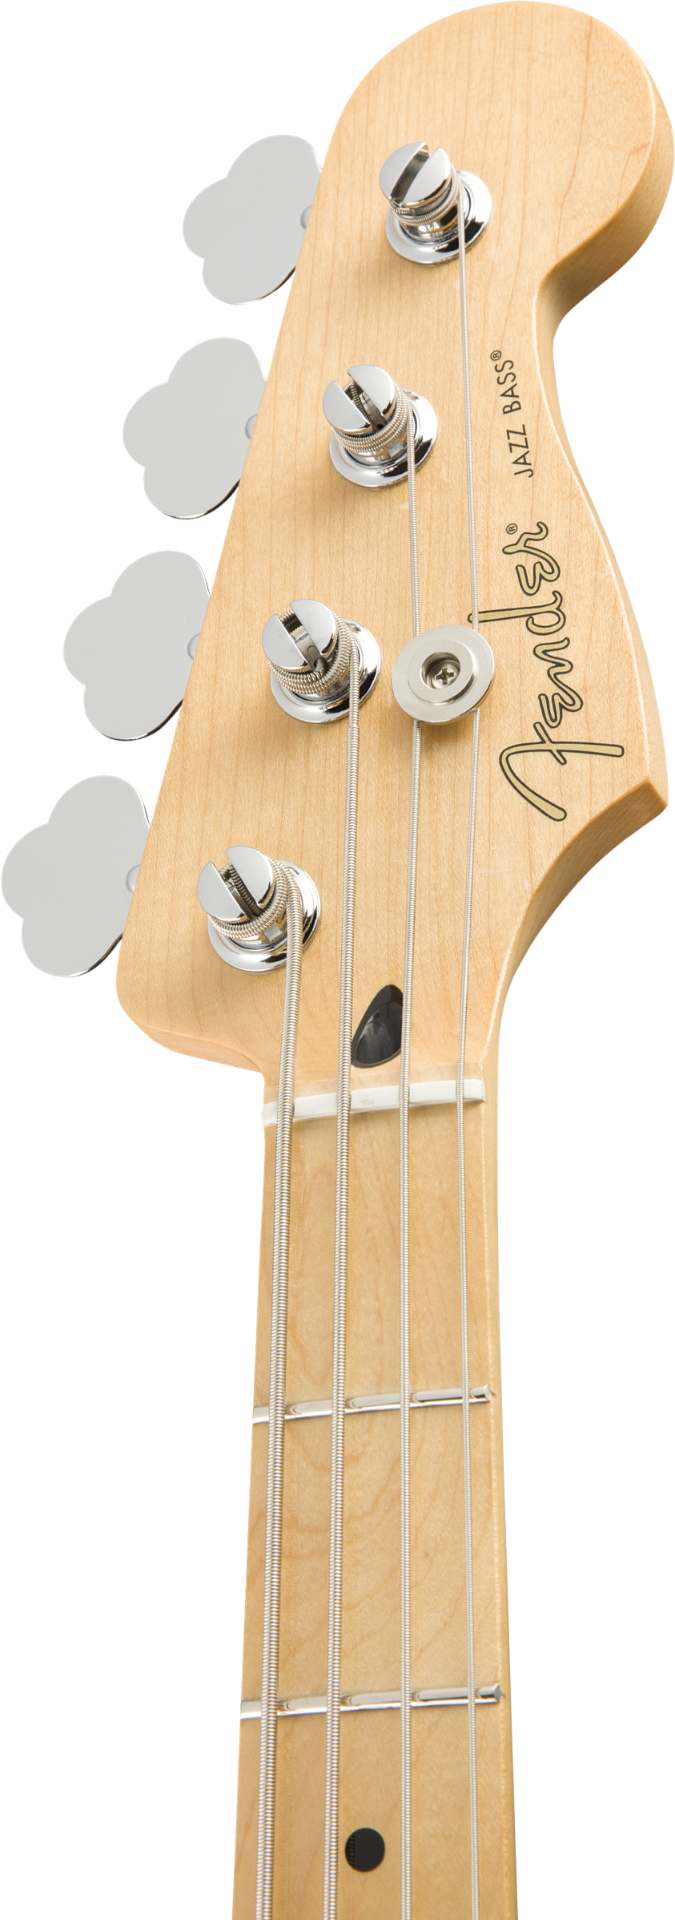 Fender Player Jazz Electric Bass Guitar - Maple Fingerboard - Black